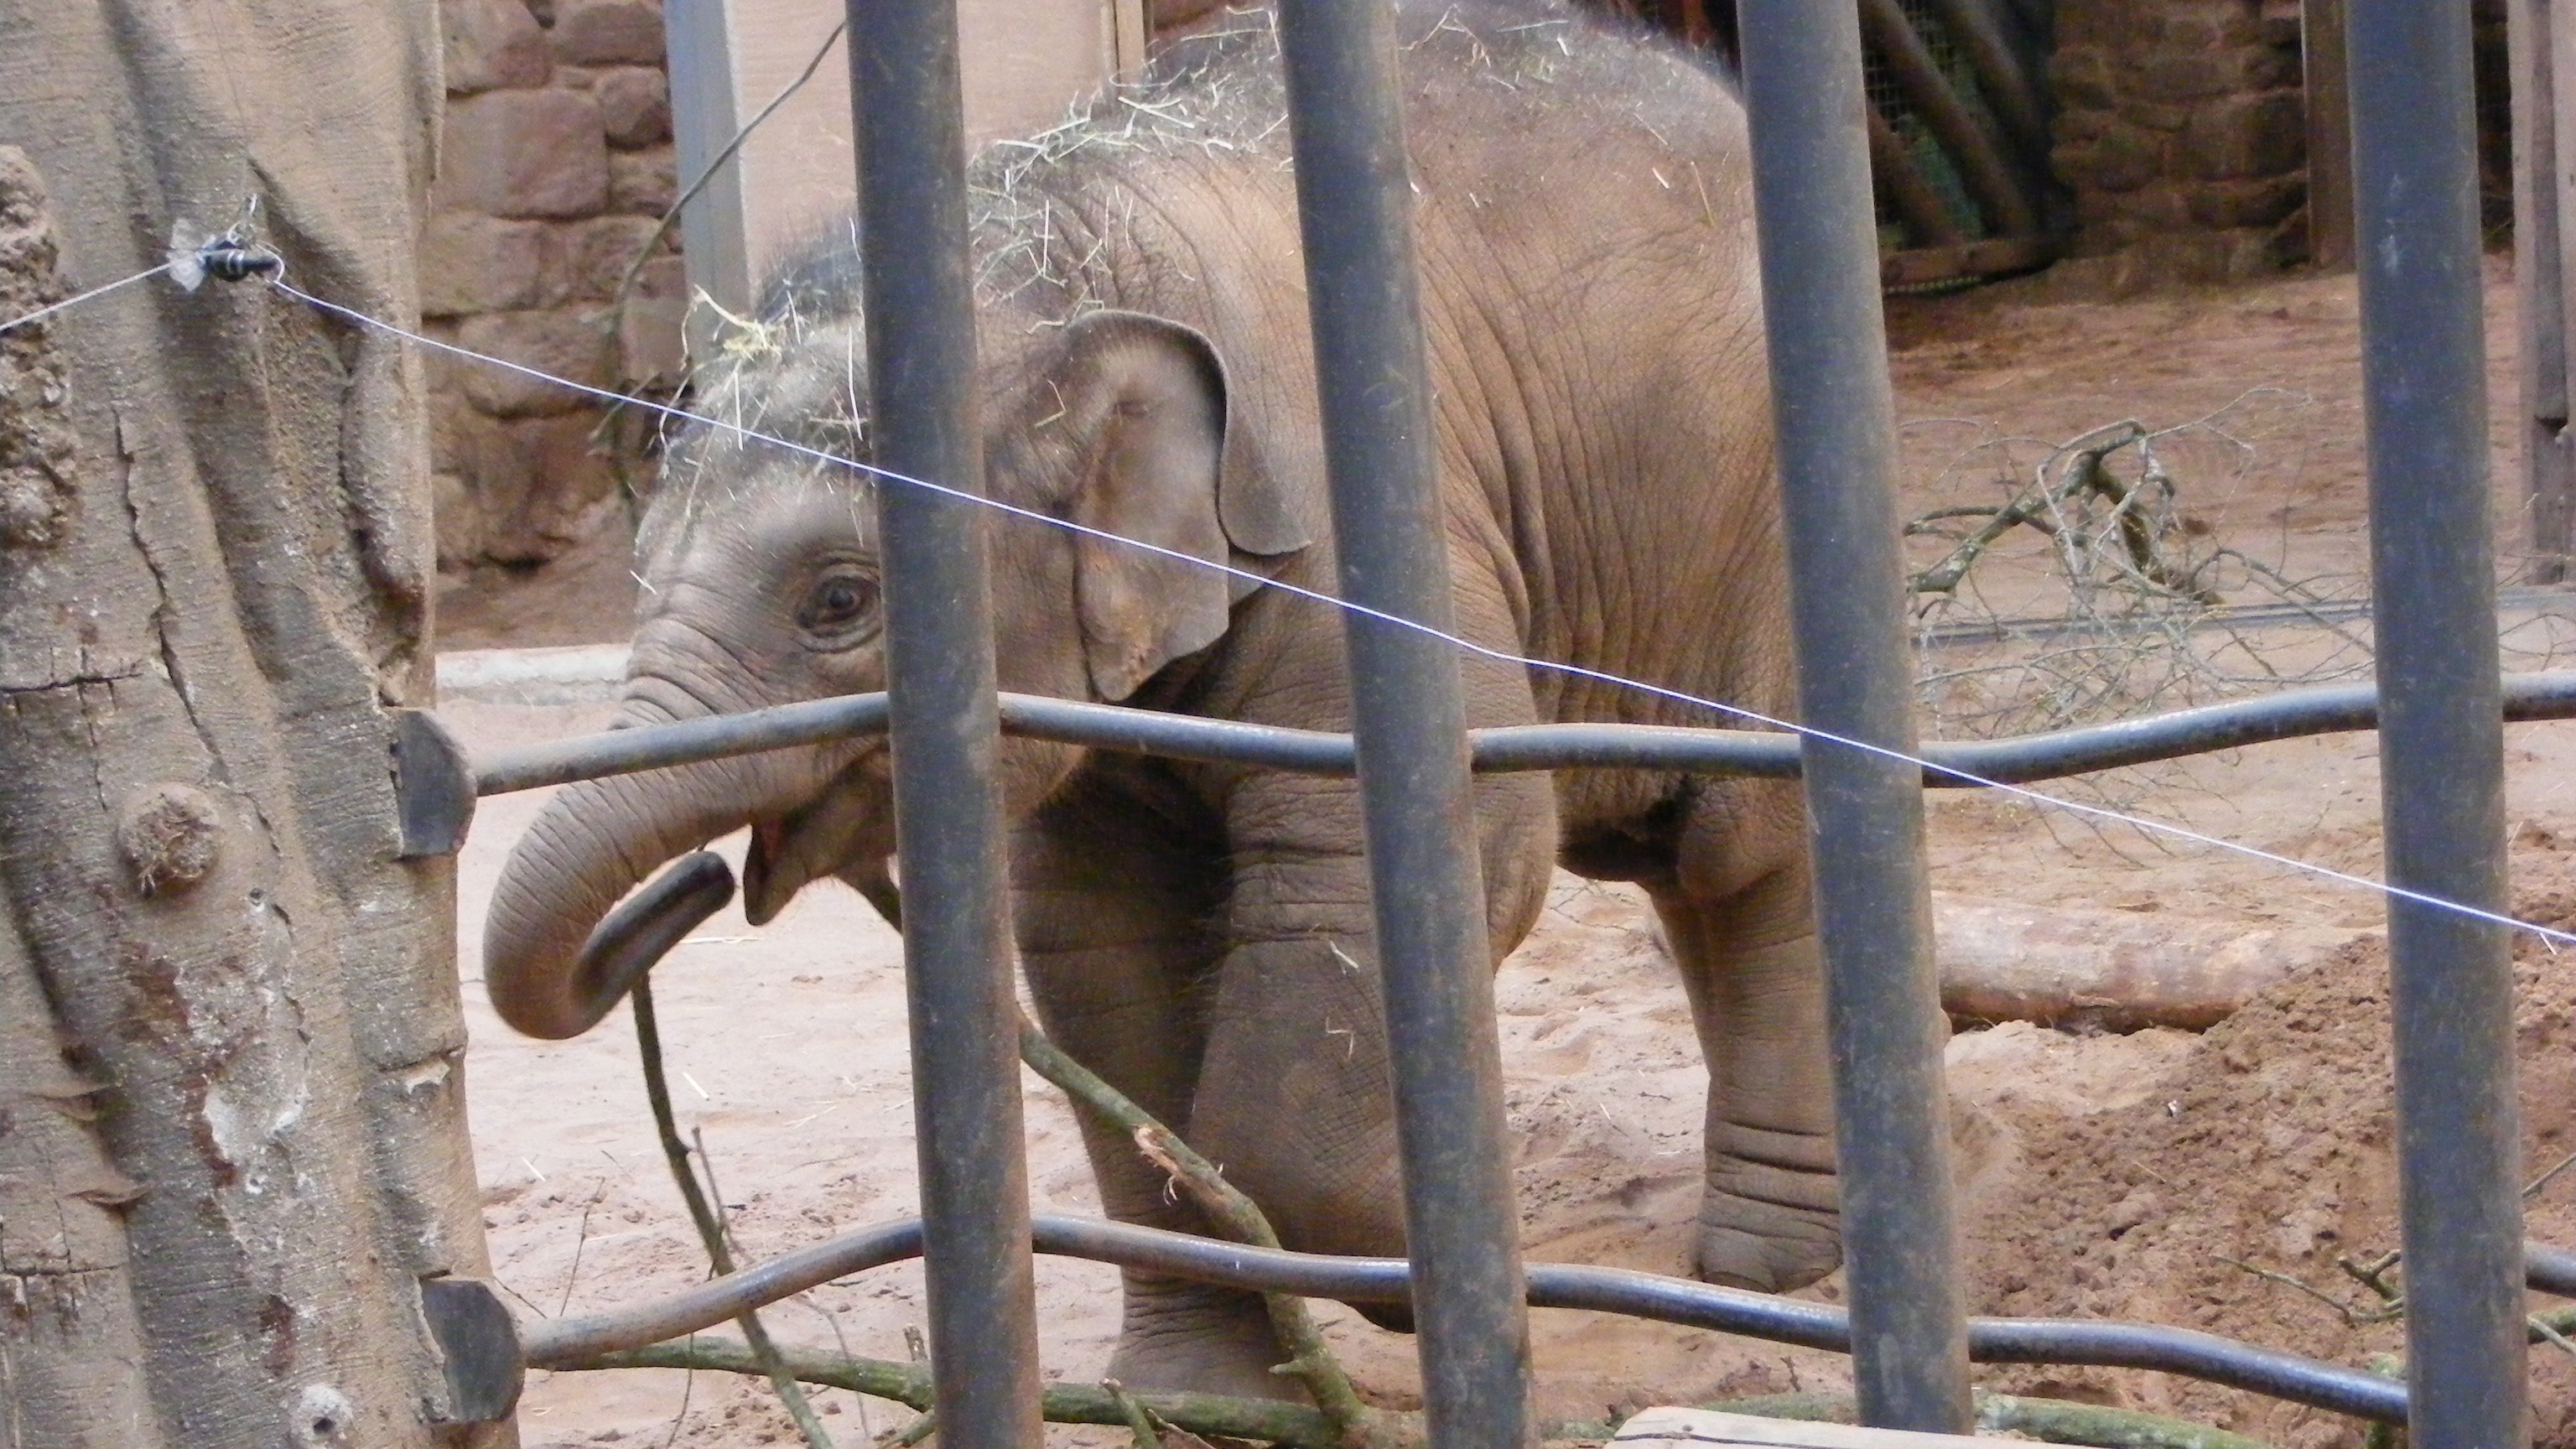 Wild Animals In Captivity - Born Free